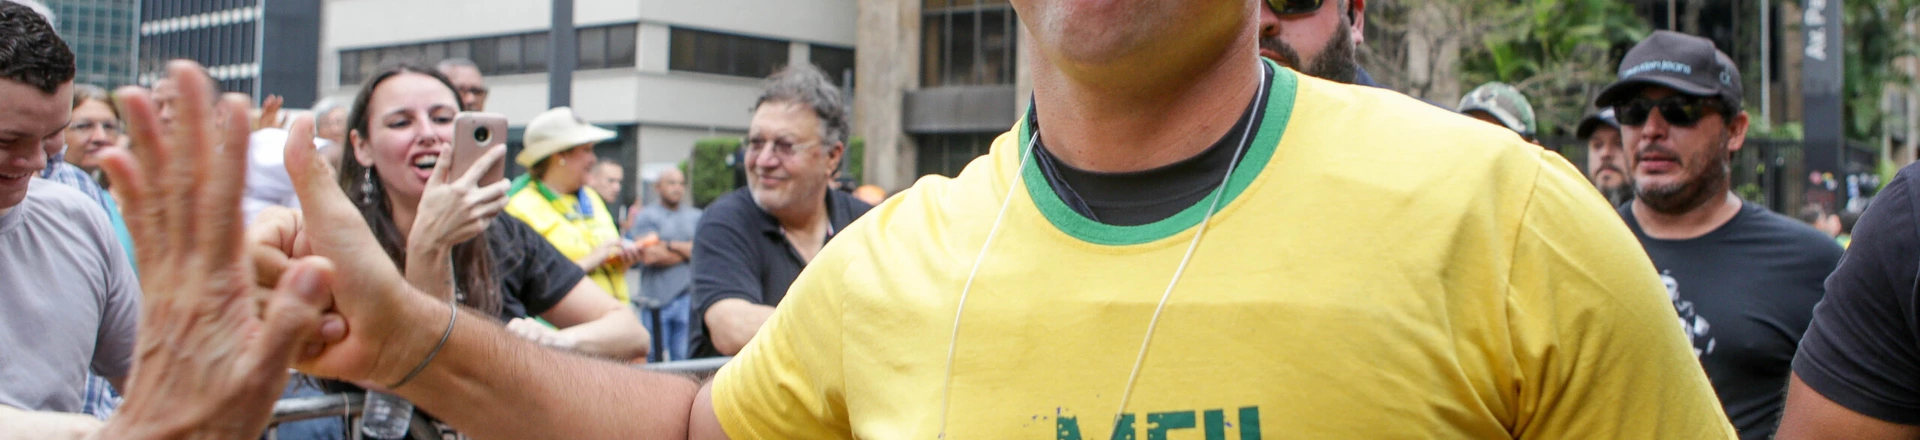 Eduardo Bolsonaro, filho do presidenciável Jair Bolsonaro.